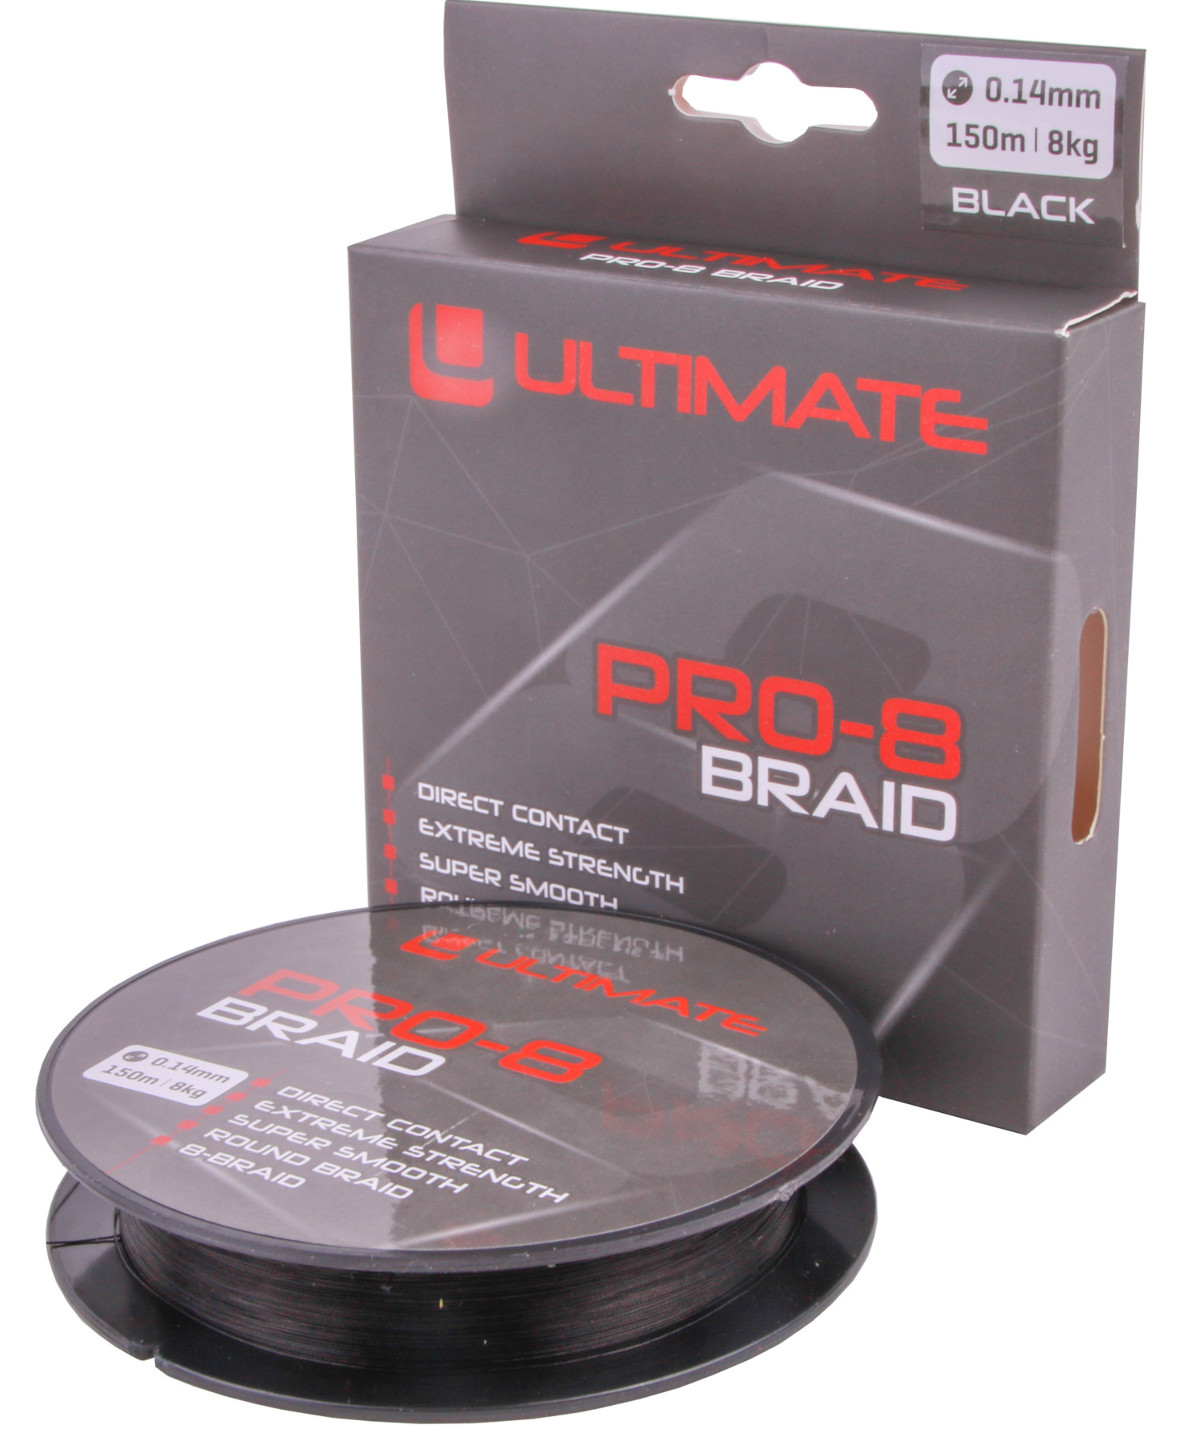 Ultimate Pro-8 Braid